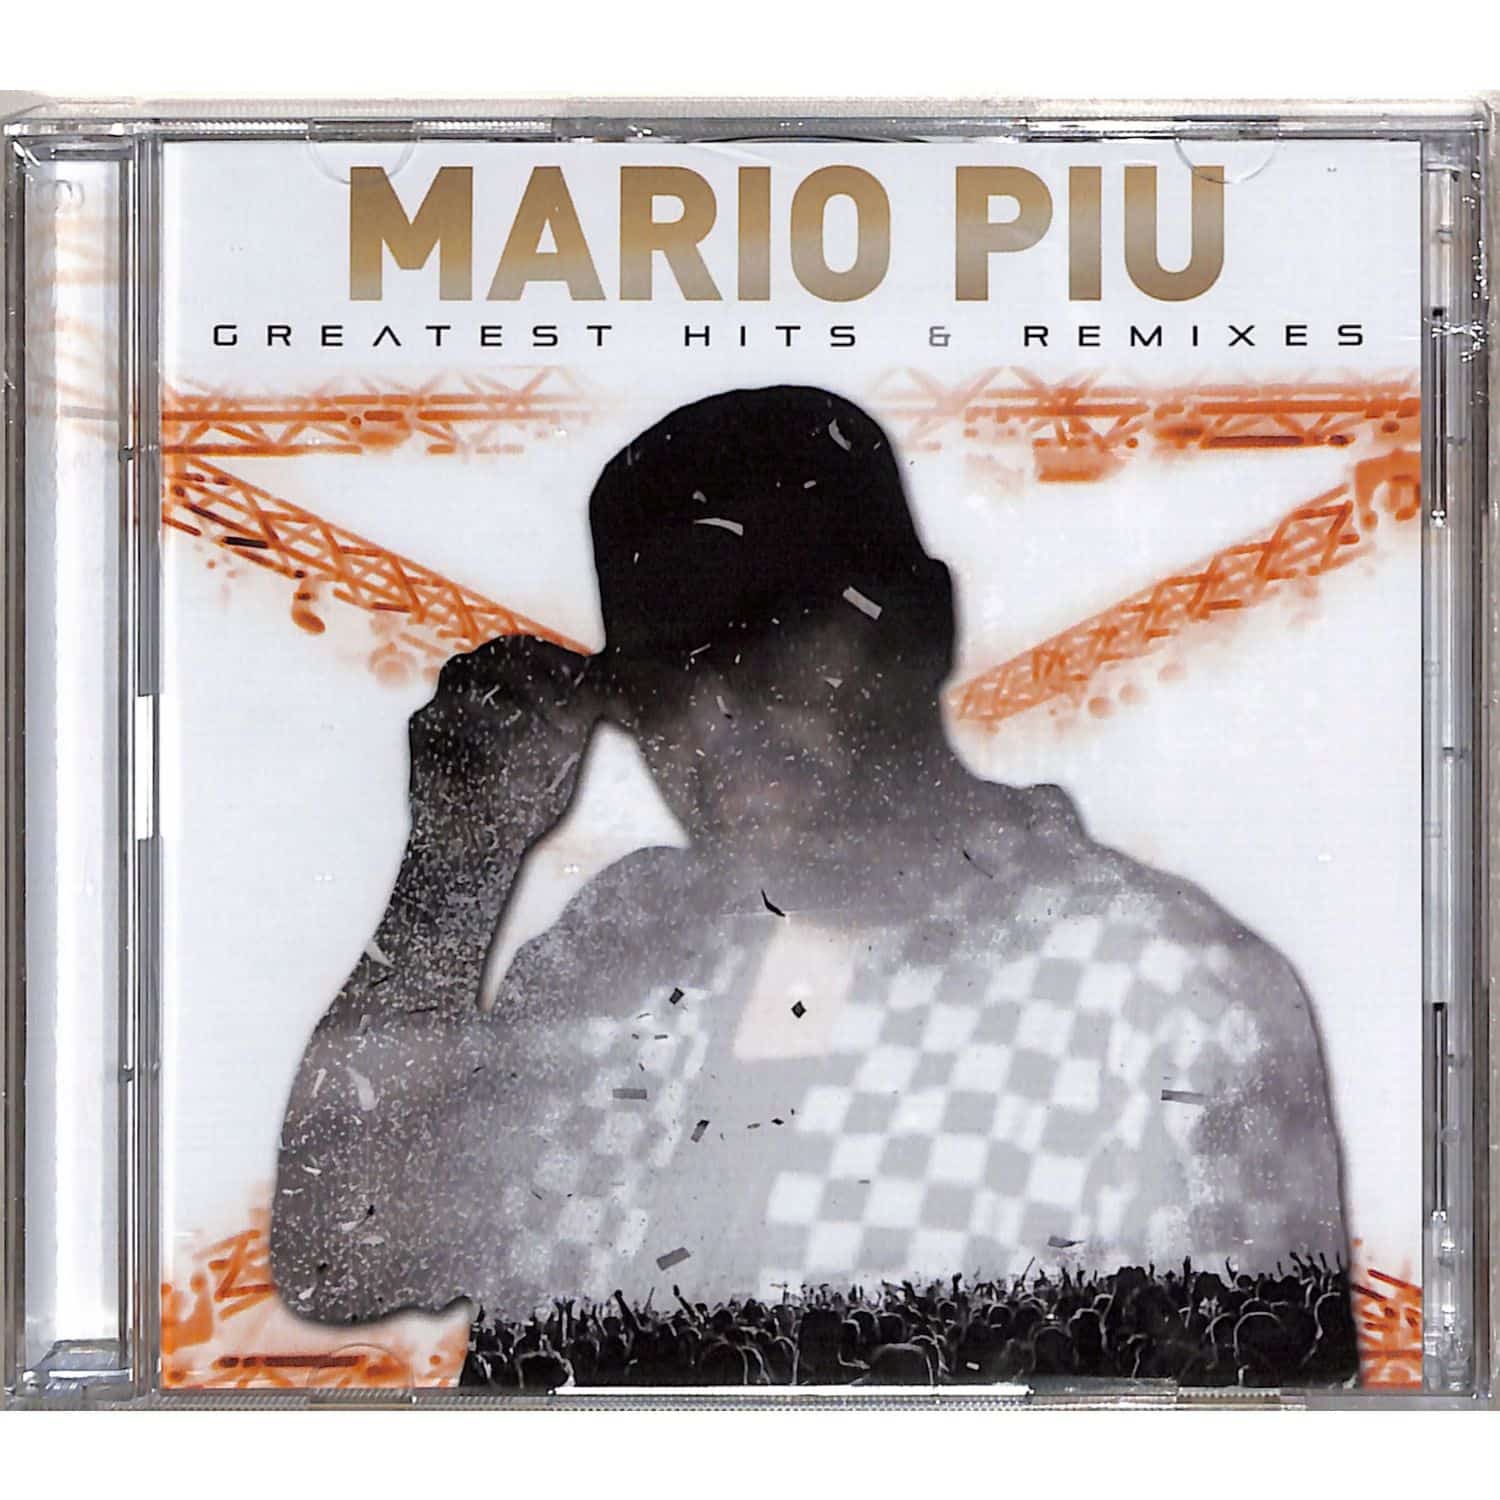 Mario Piu - GREATEST HITS & REMIXES 